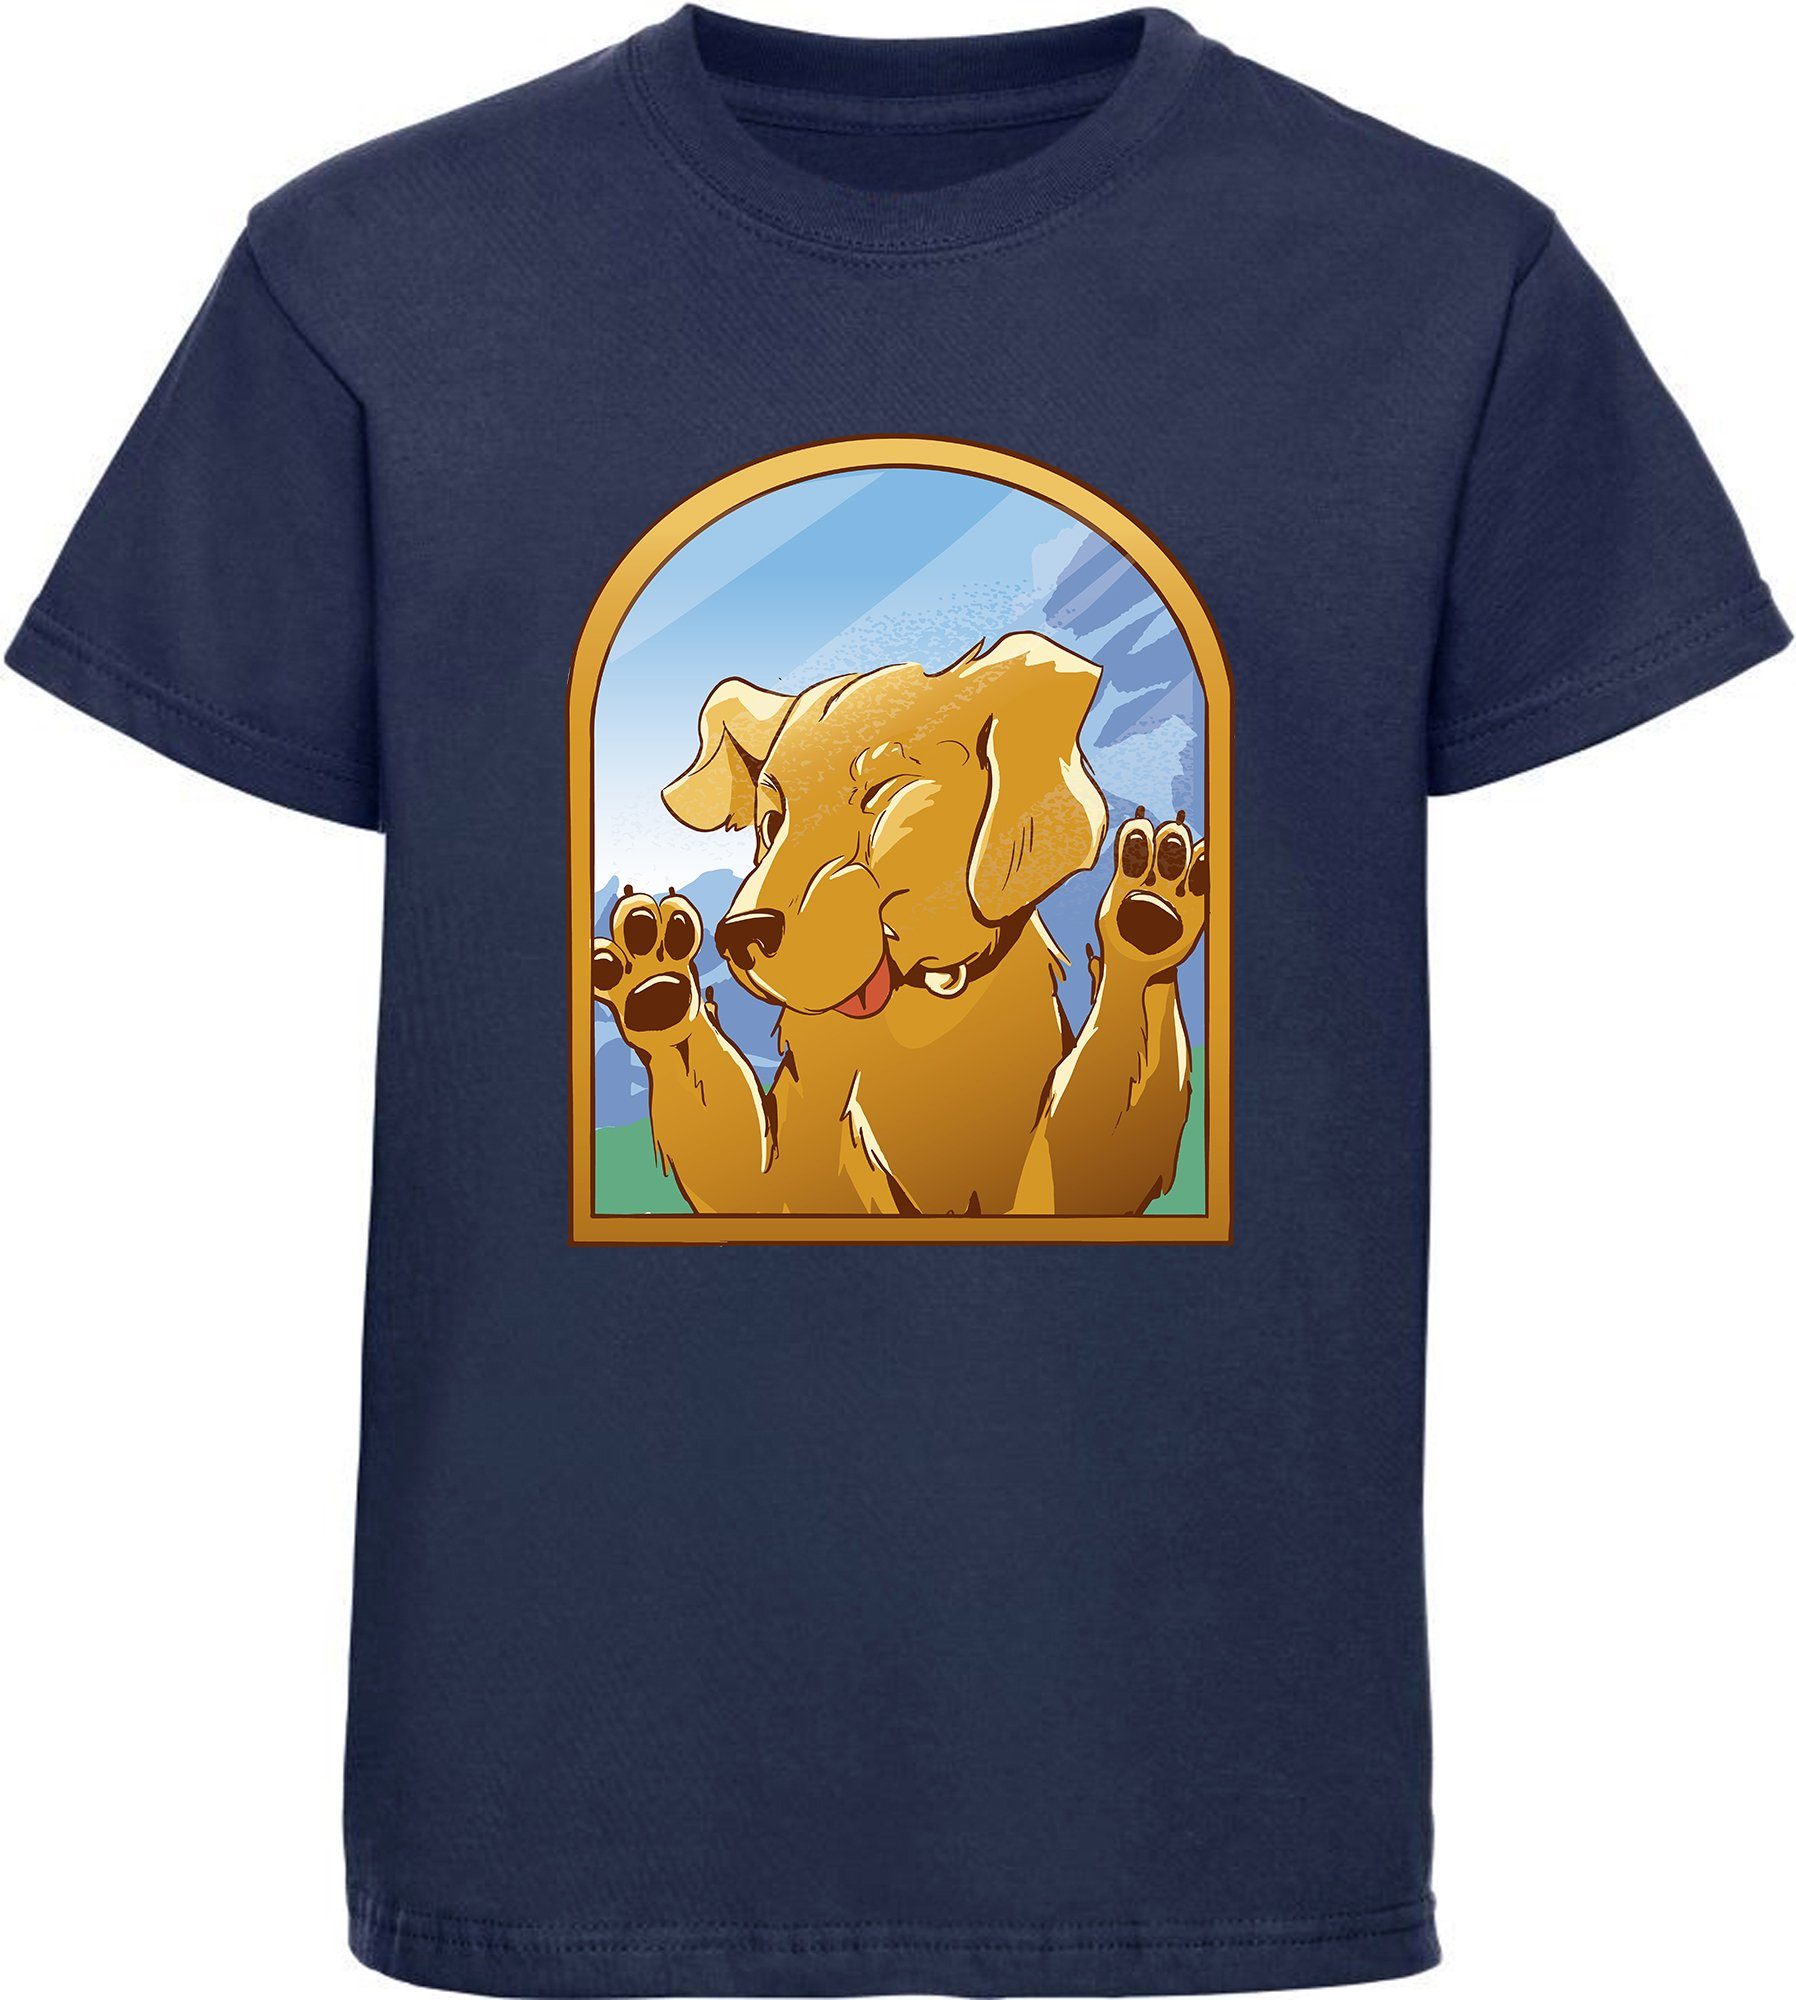 MyDesign24 Print-Shirt bedrucktes Kinder Hunde T-Shirt - Labrador gegen Fenster Baumwollshirt mit Aufdruck, i222 navy blau